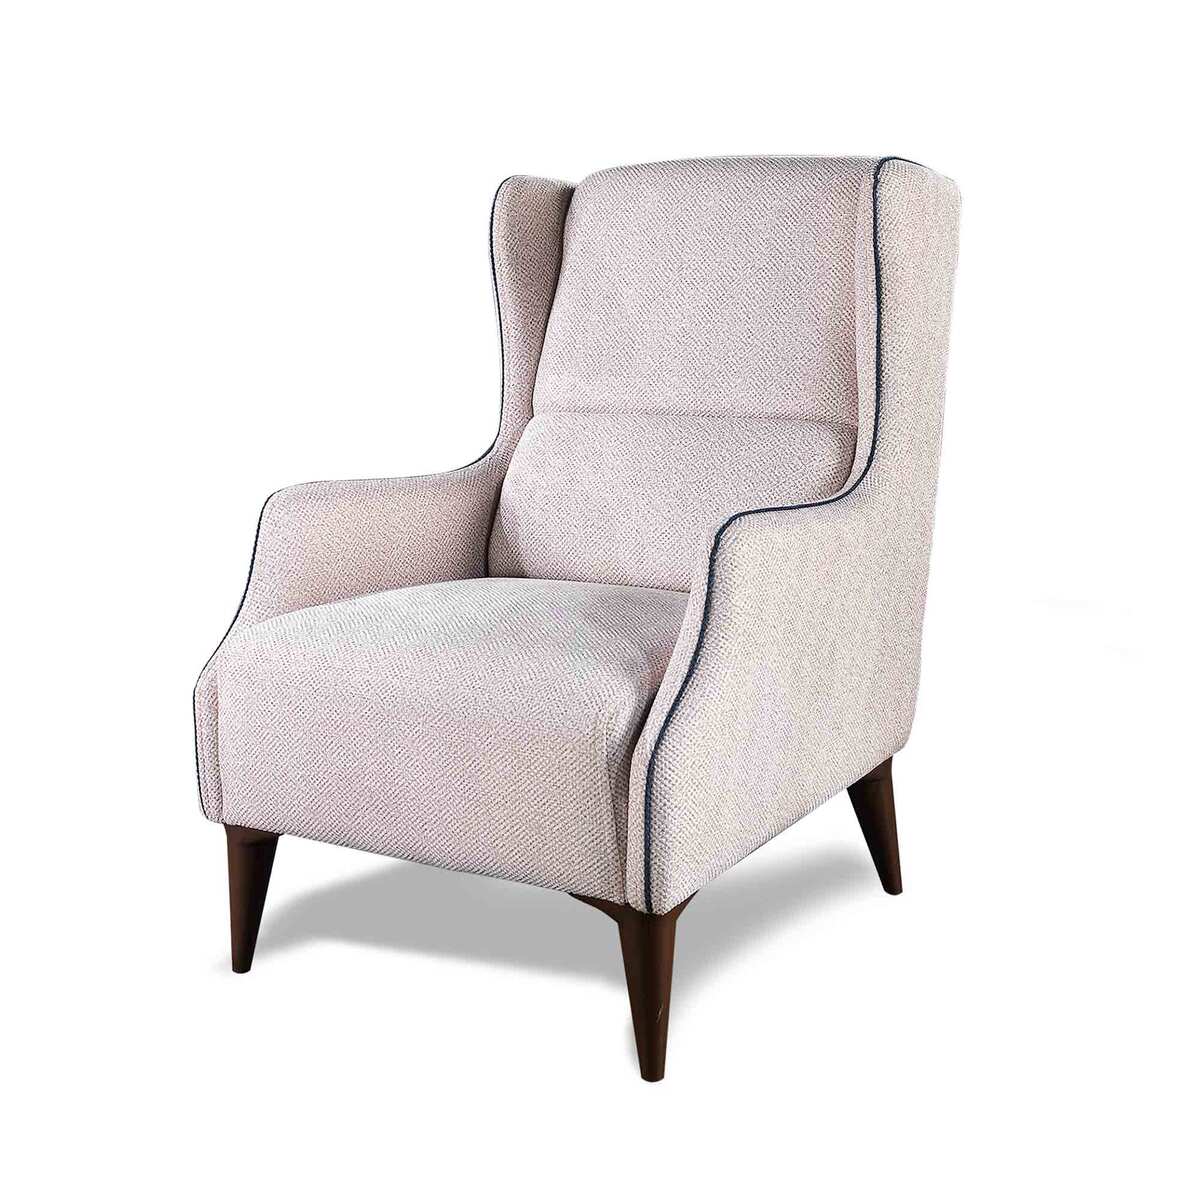 ELIS Sofa 1 Seater .Size:96x73x80 Cms(HxWxL)